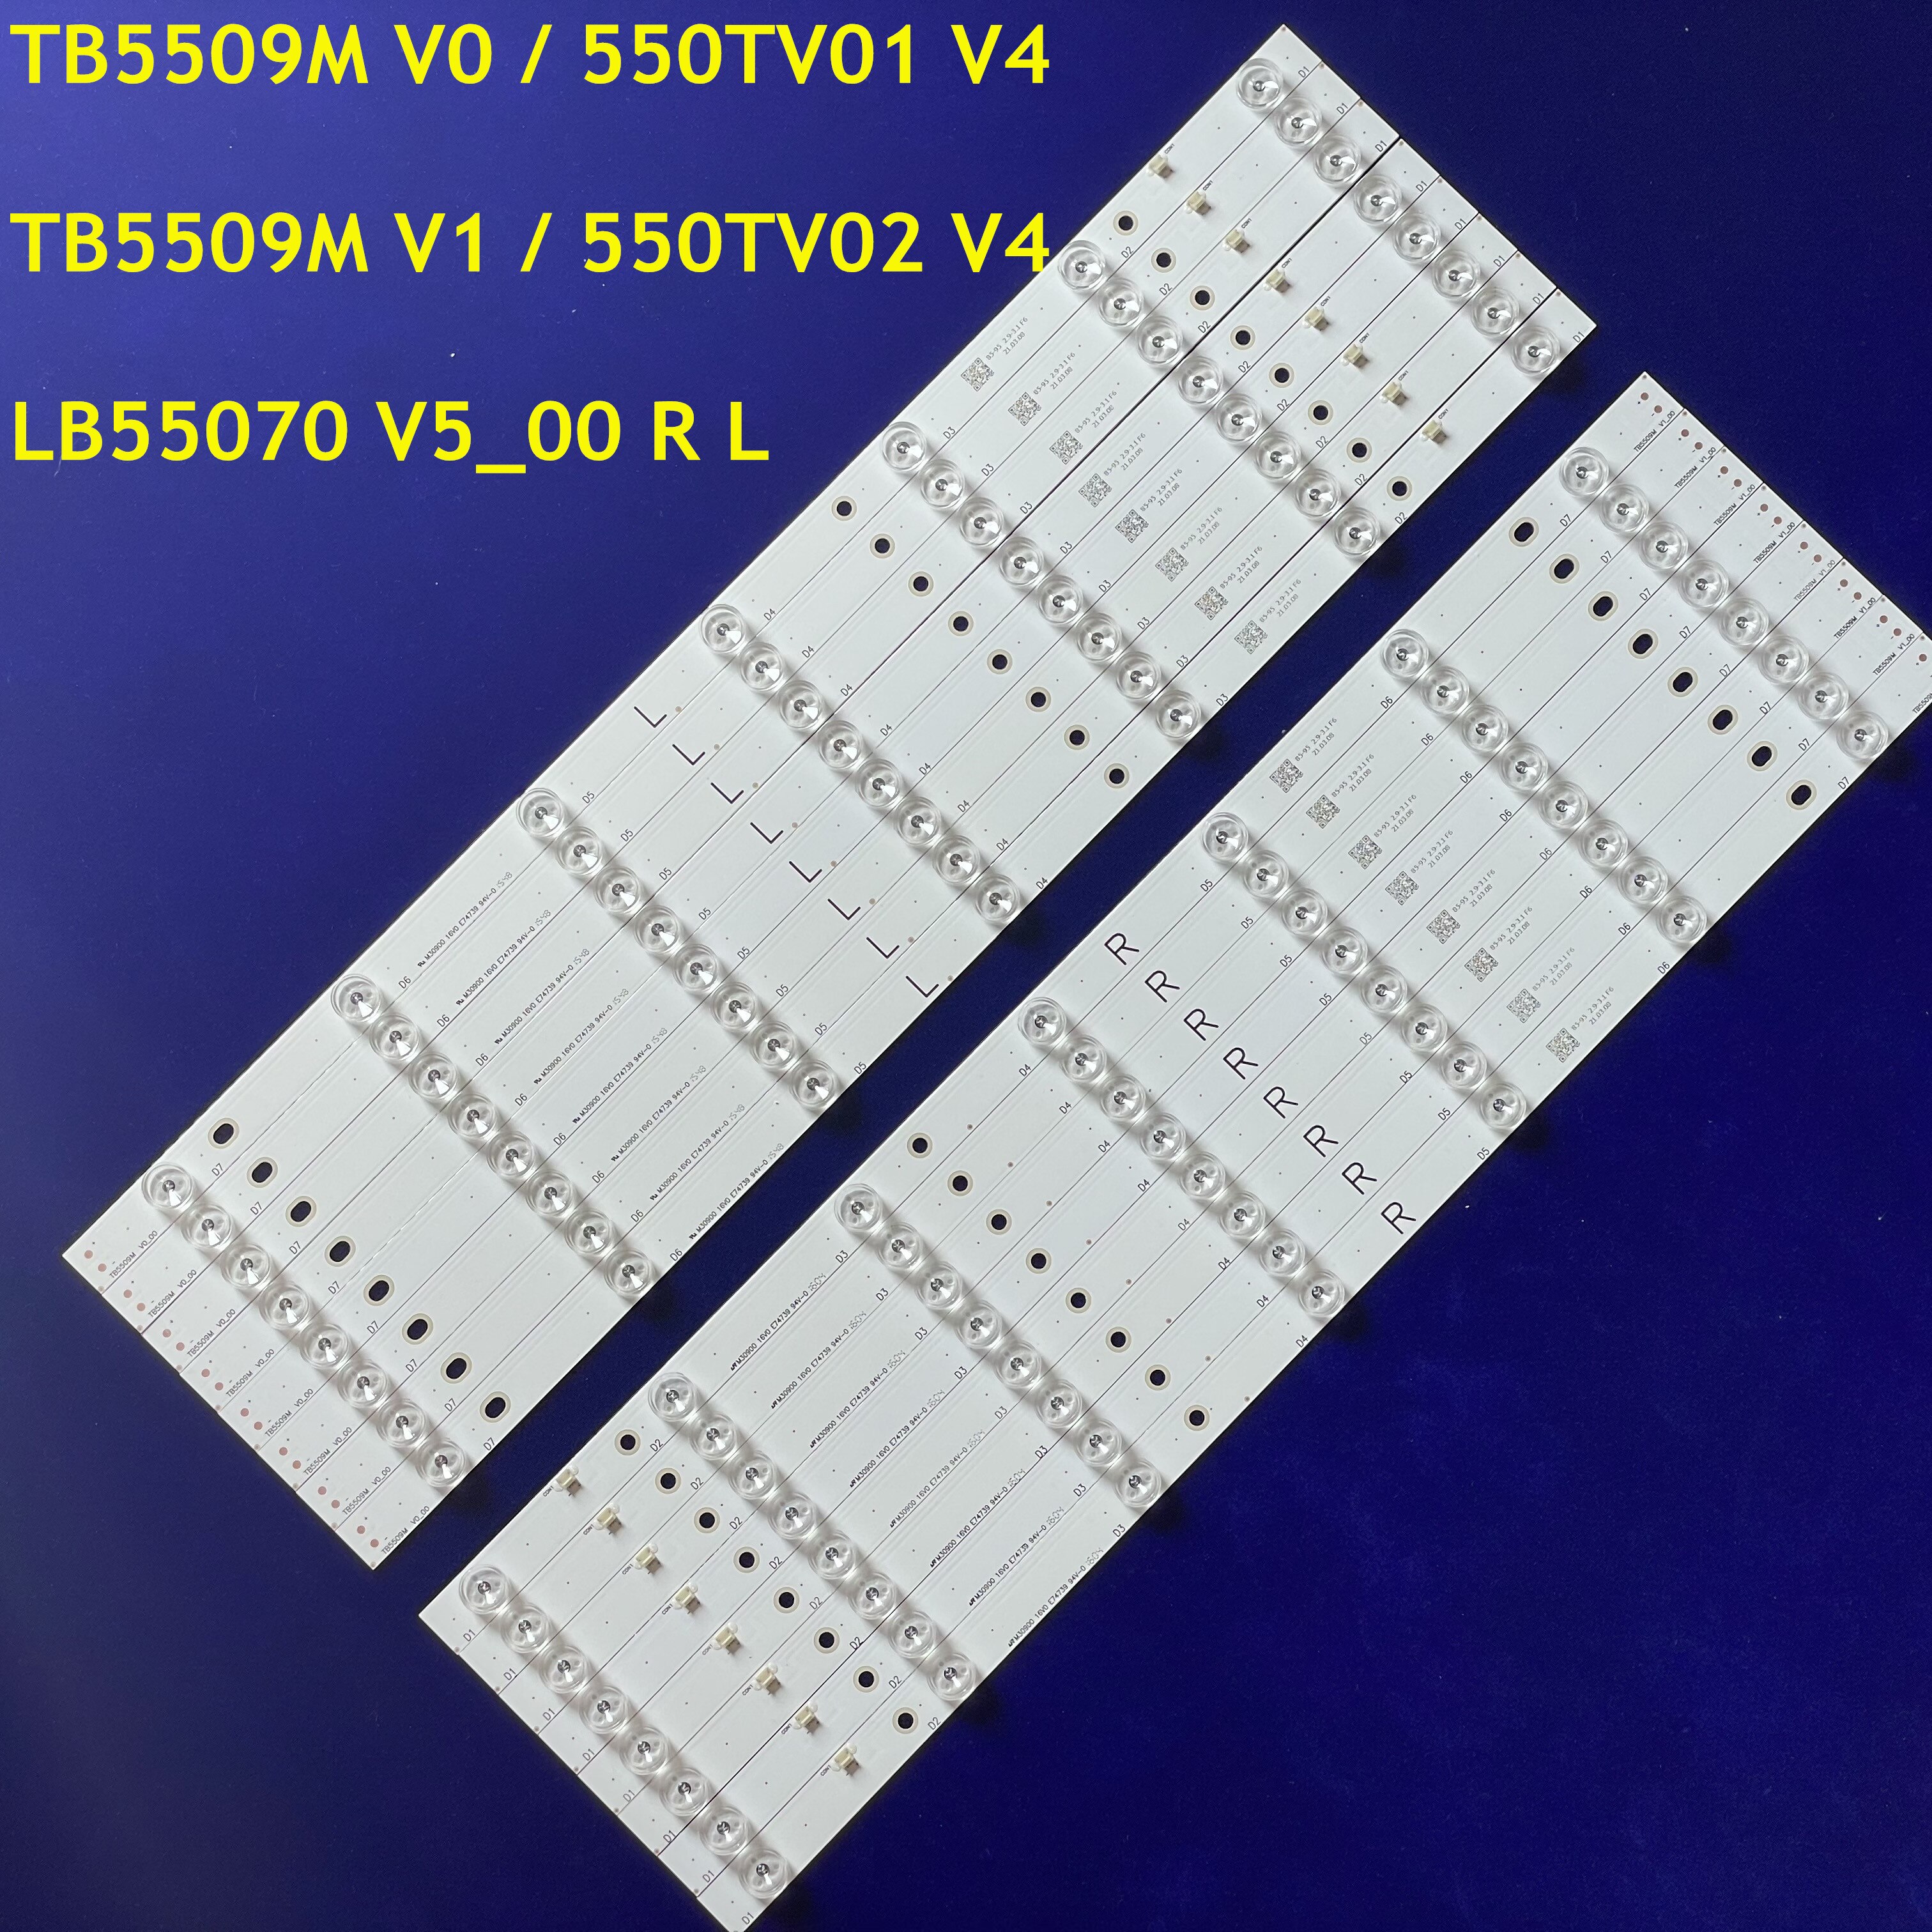 8 stk ( 4r+4l )  led baggrundsbelysning array 55 &quot;  tv 550 tv 01+550 tv 02 / tb5509m v0+tb5509m v1 lc550 eqy (sj)  (a5)  kompatible tx -55 ax 630